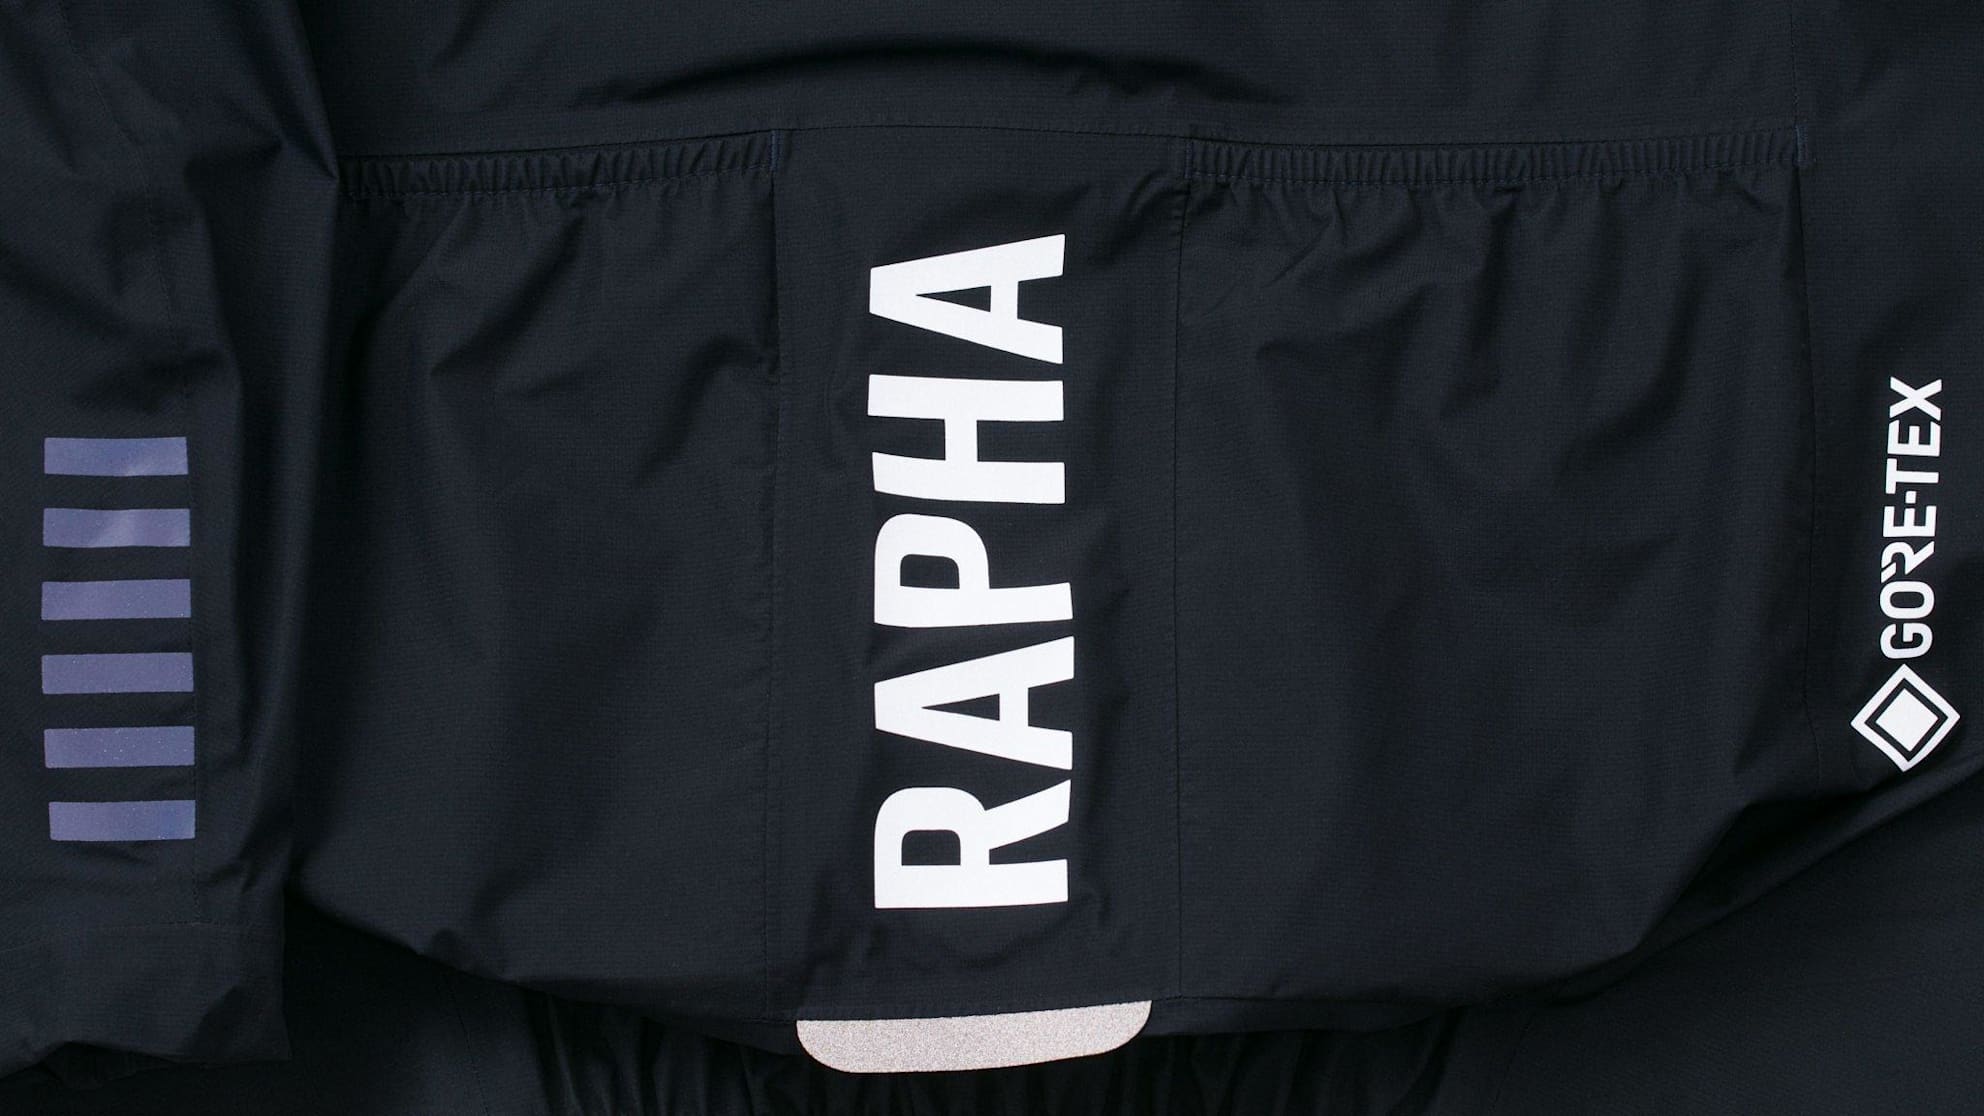 Women's Pro Team Insulated Rain Jacket | Rapha